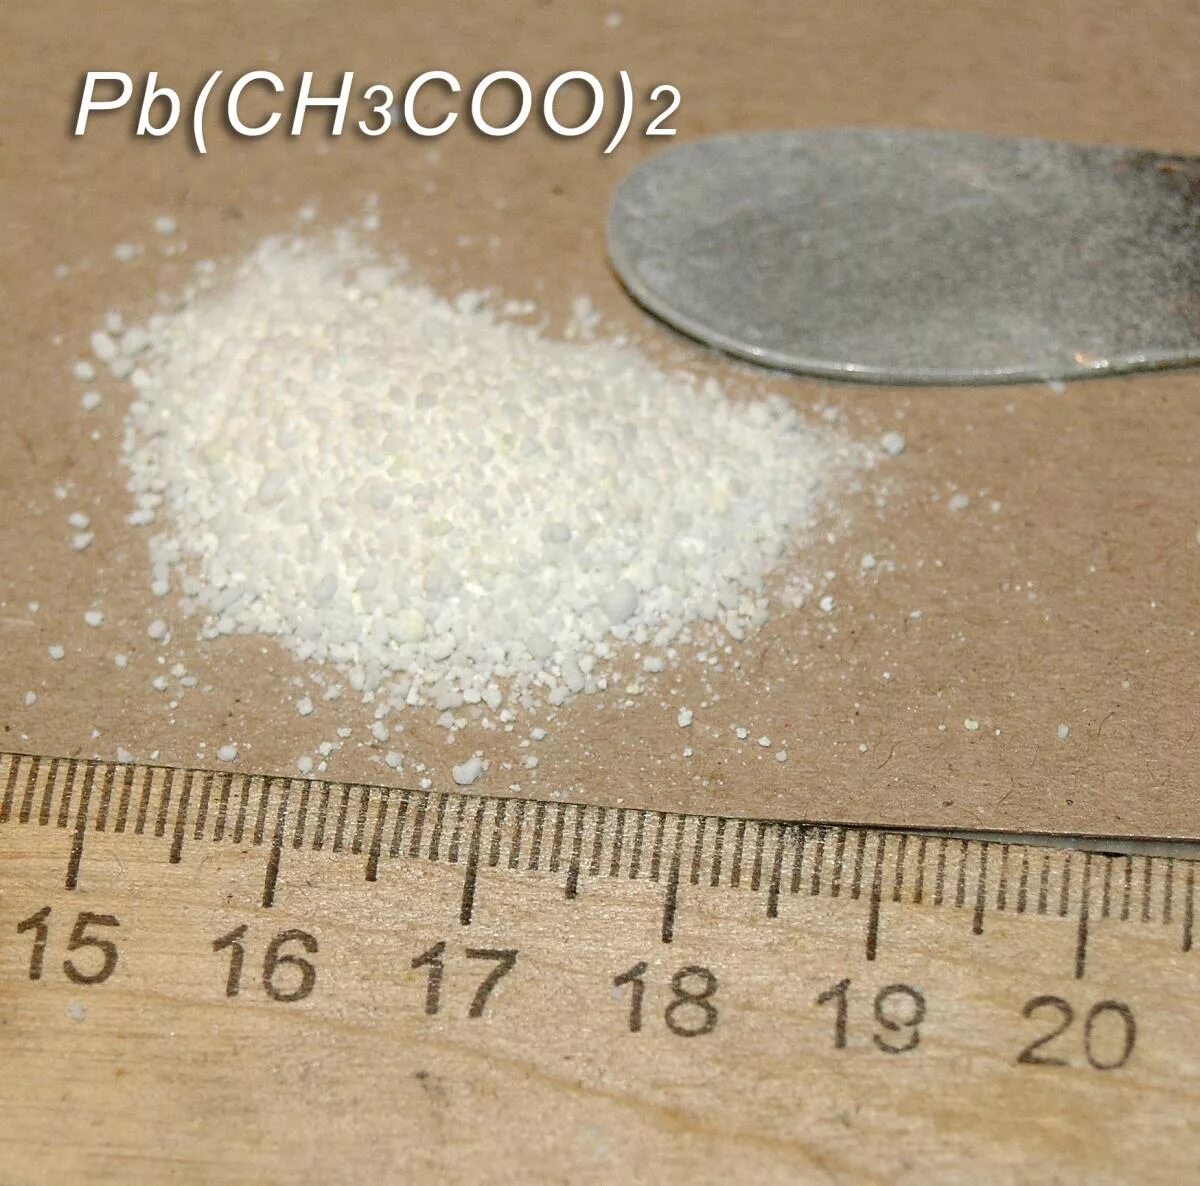 Zn ch3coo 2. PB(ch3coo)2. Соли свинца. Ацетат свинца. Свинцовый сахар.